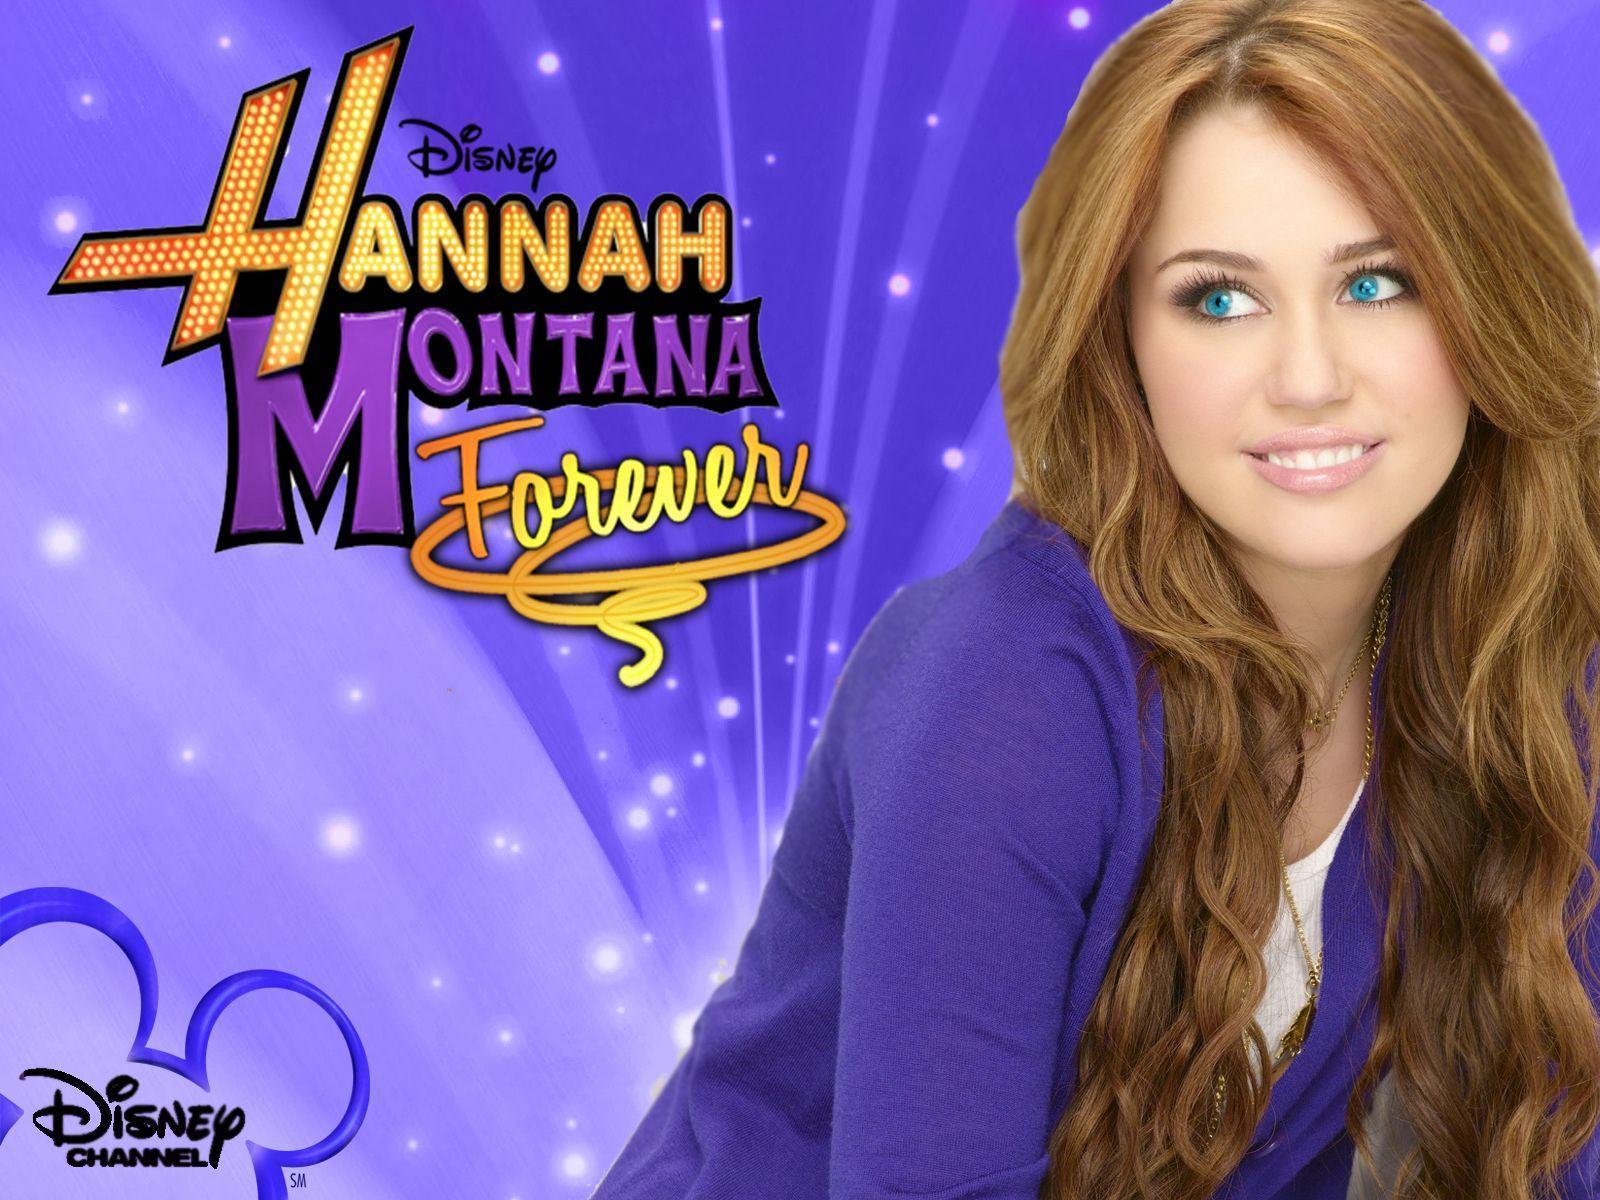 best image about Hannah Montana. Montana